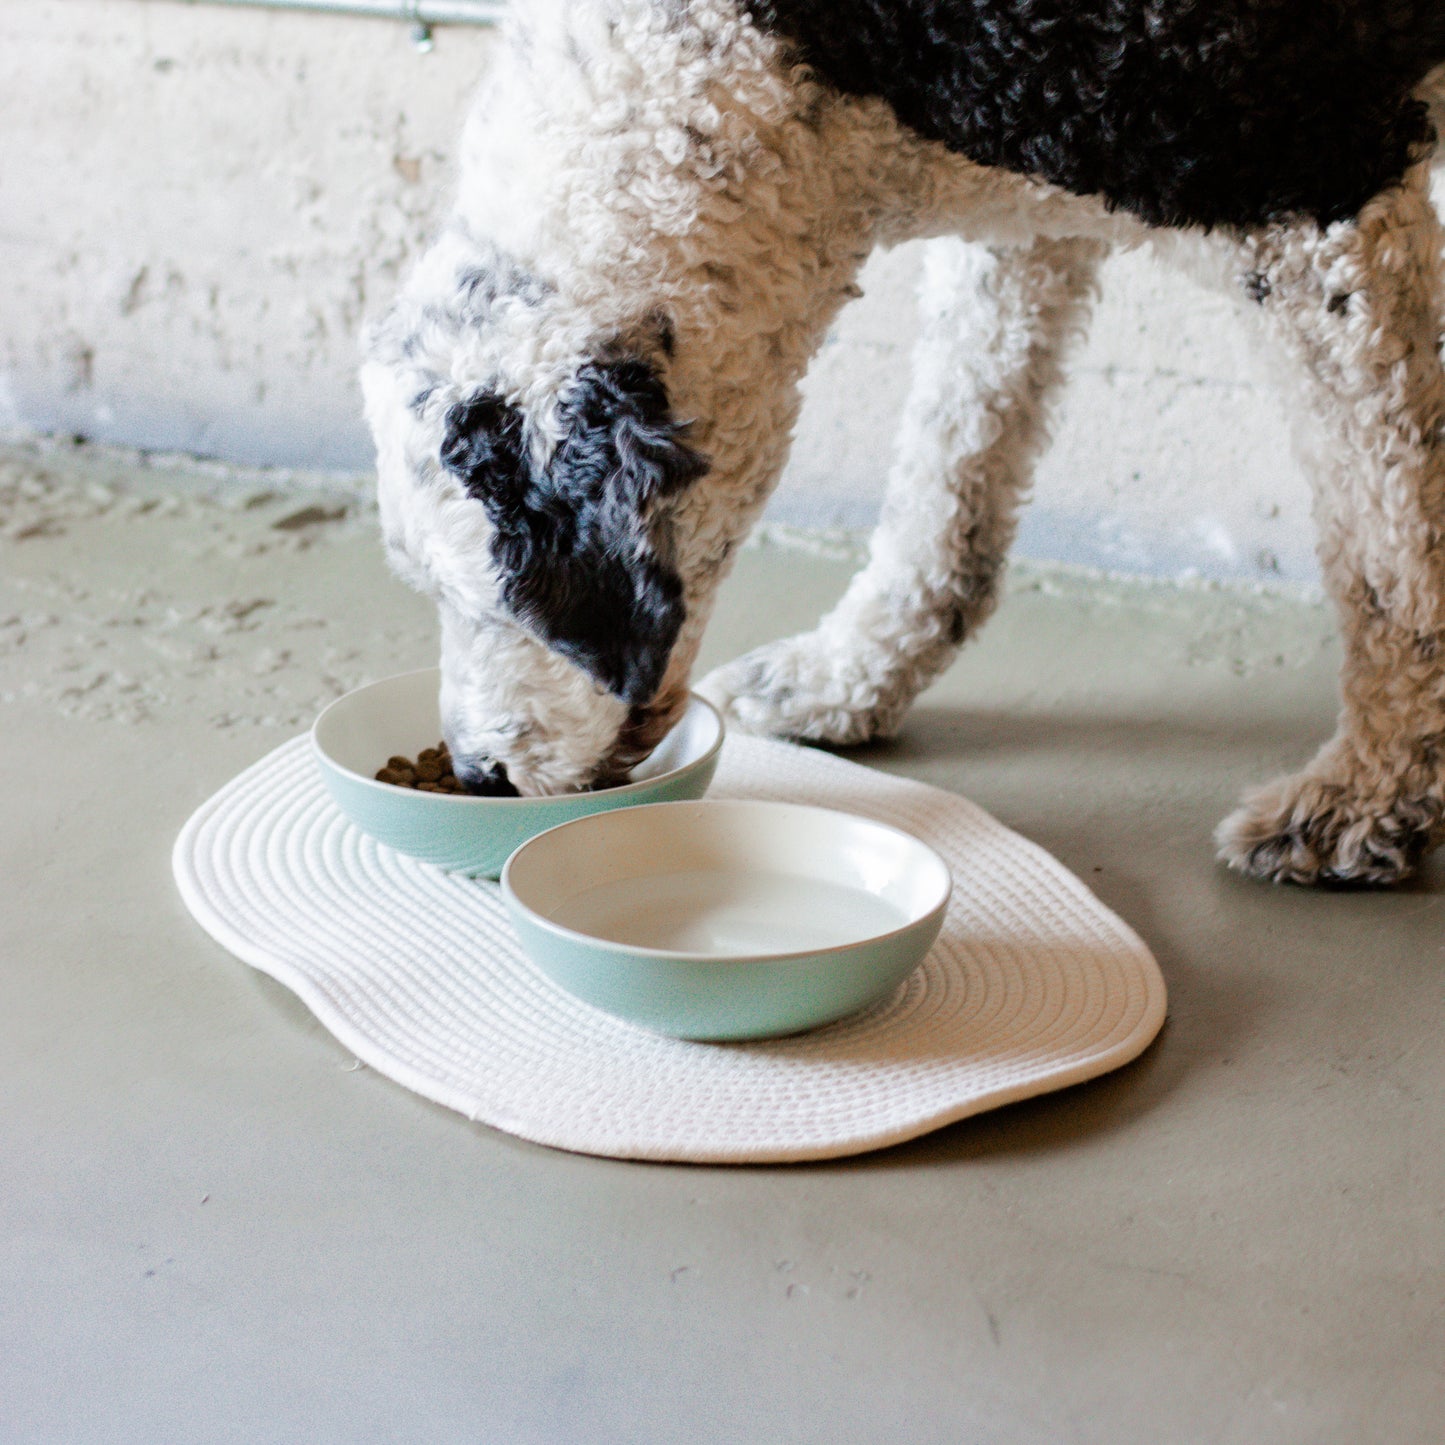 Midlee Rope Dog Bowl Placemat Cotton Indoor Pet Cat Mat Food Water Mat